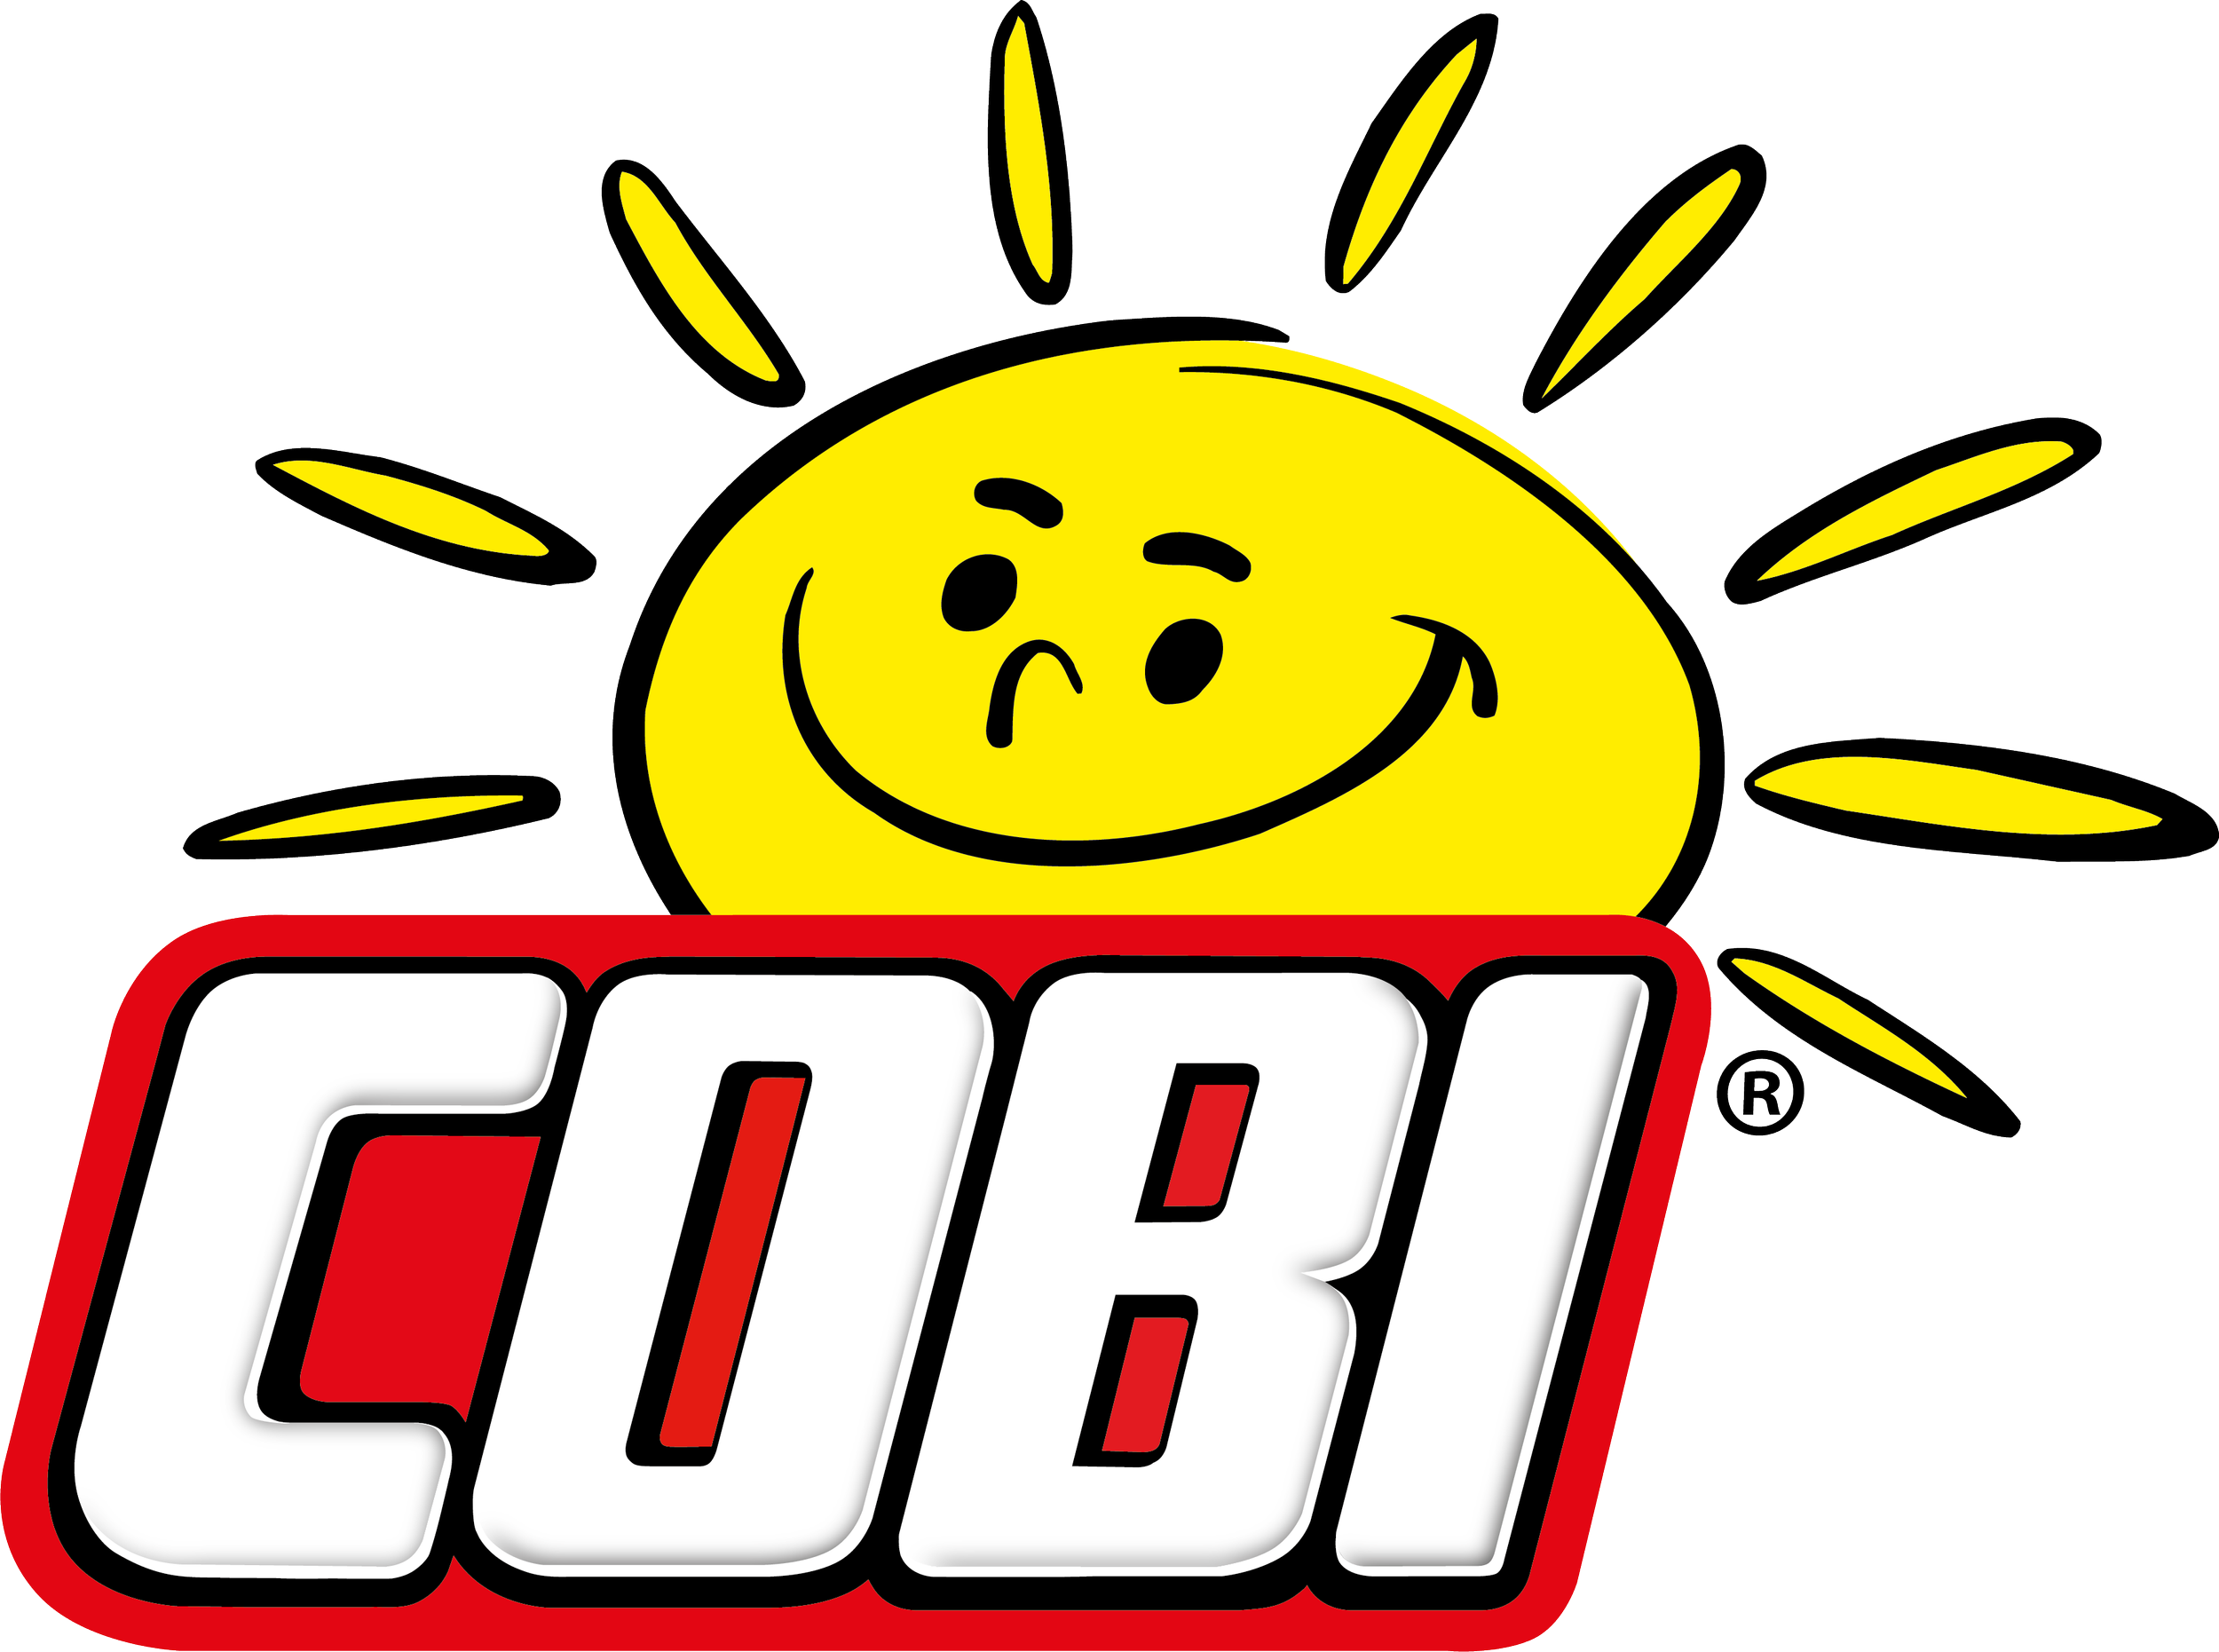 Cobi_Logo (1).png